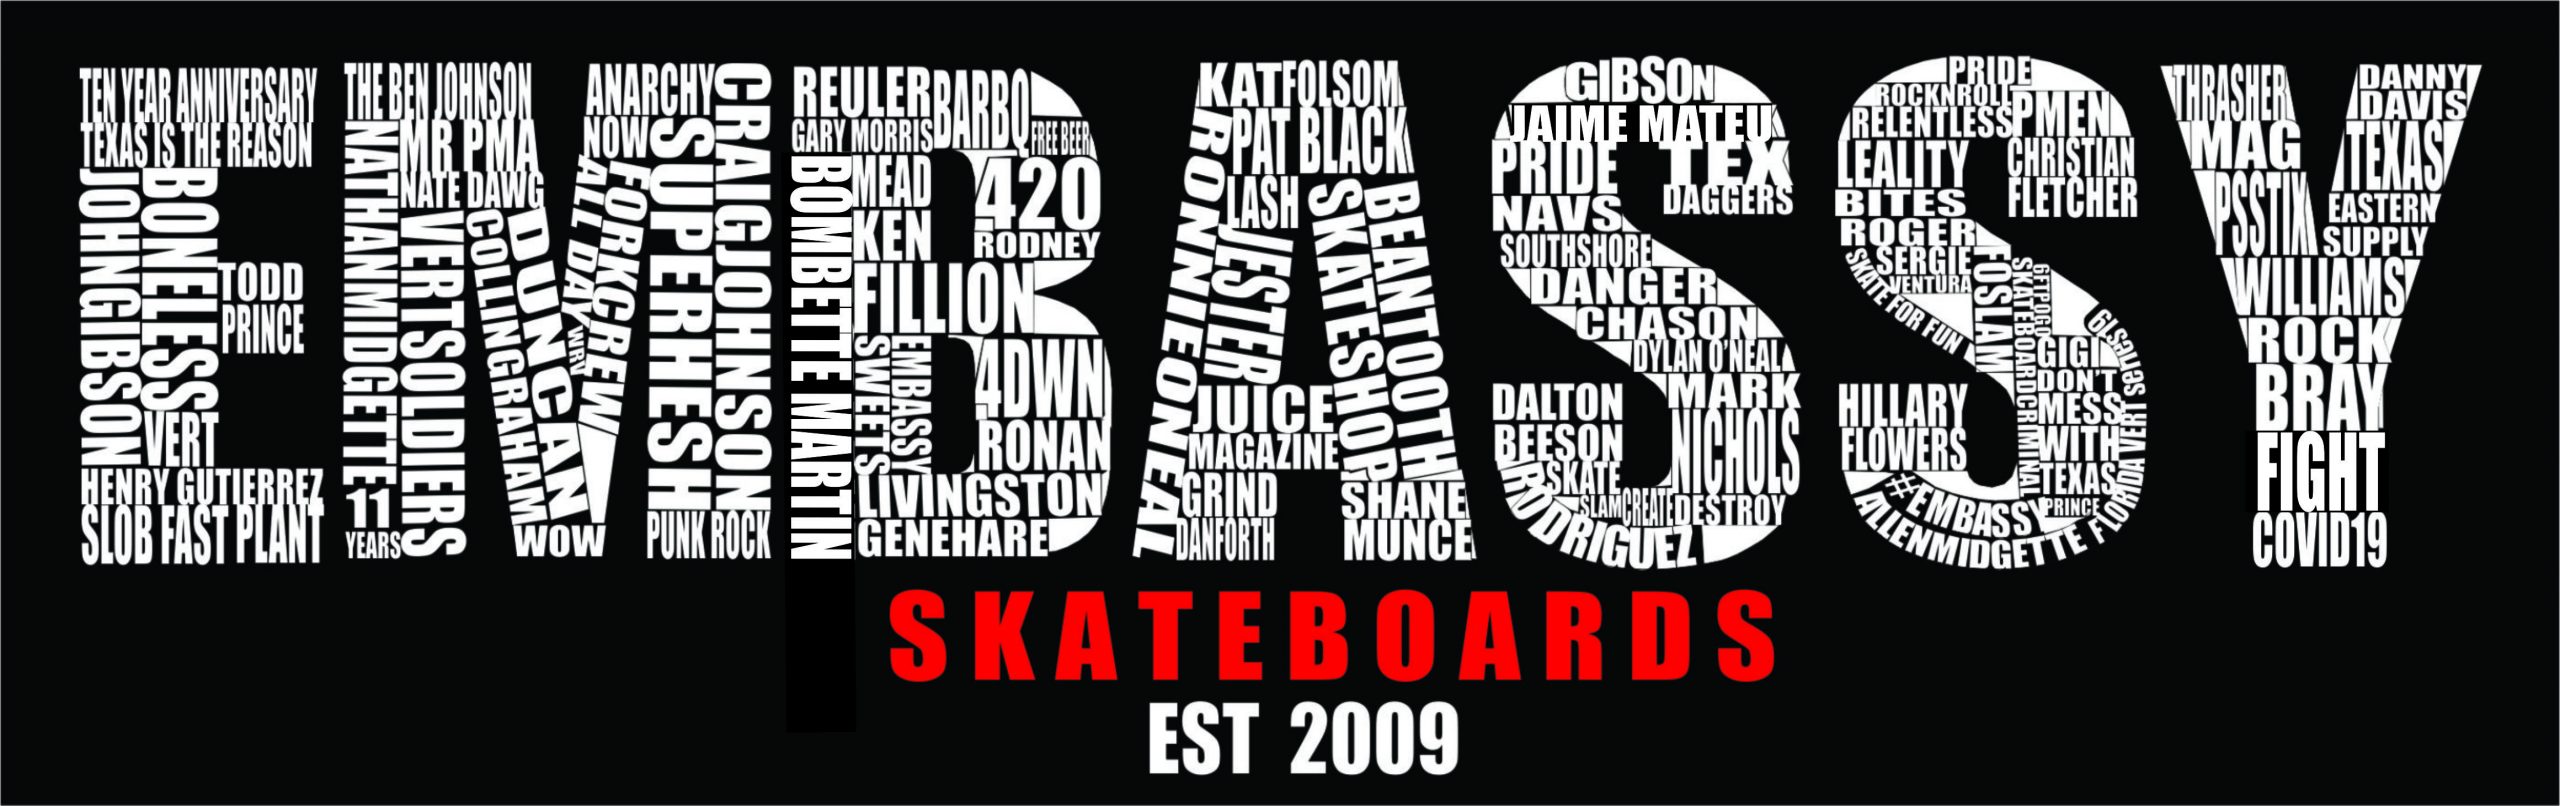 Embassy Skateboards 10 Year anniversary